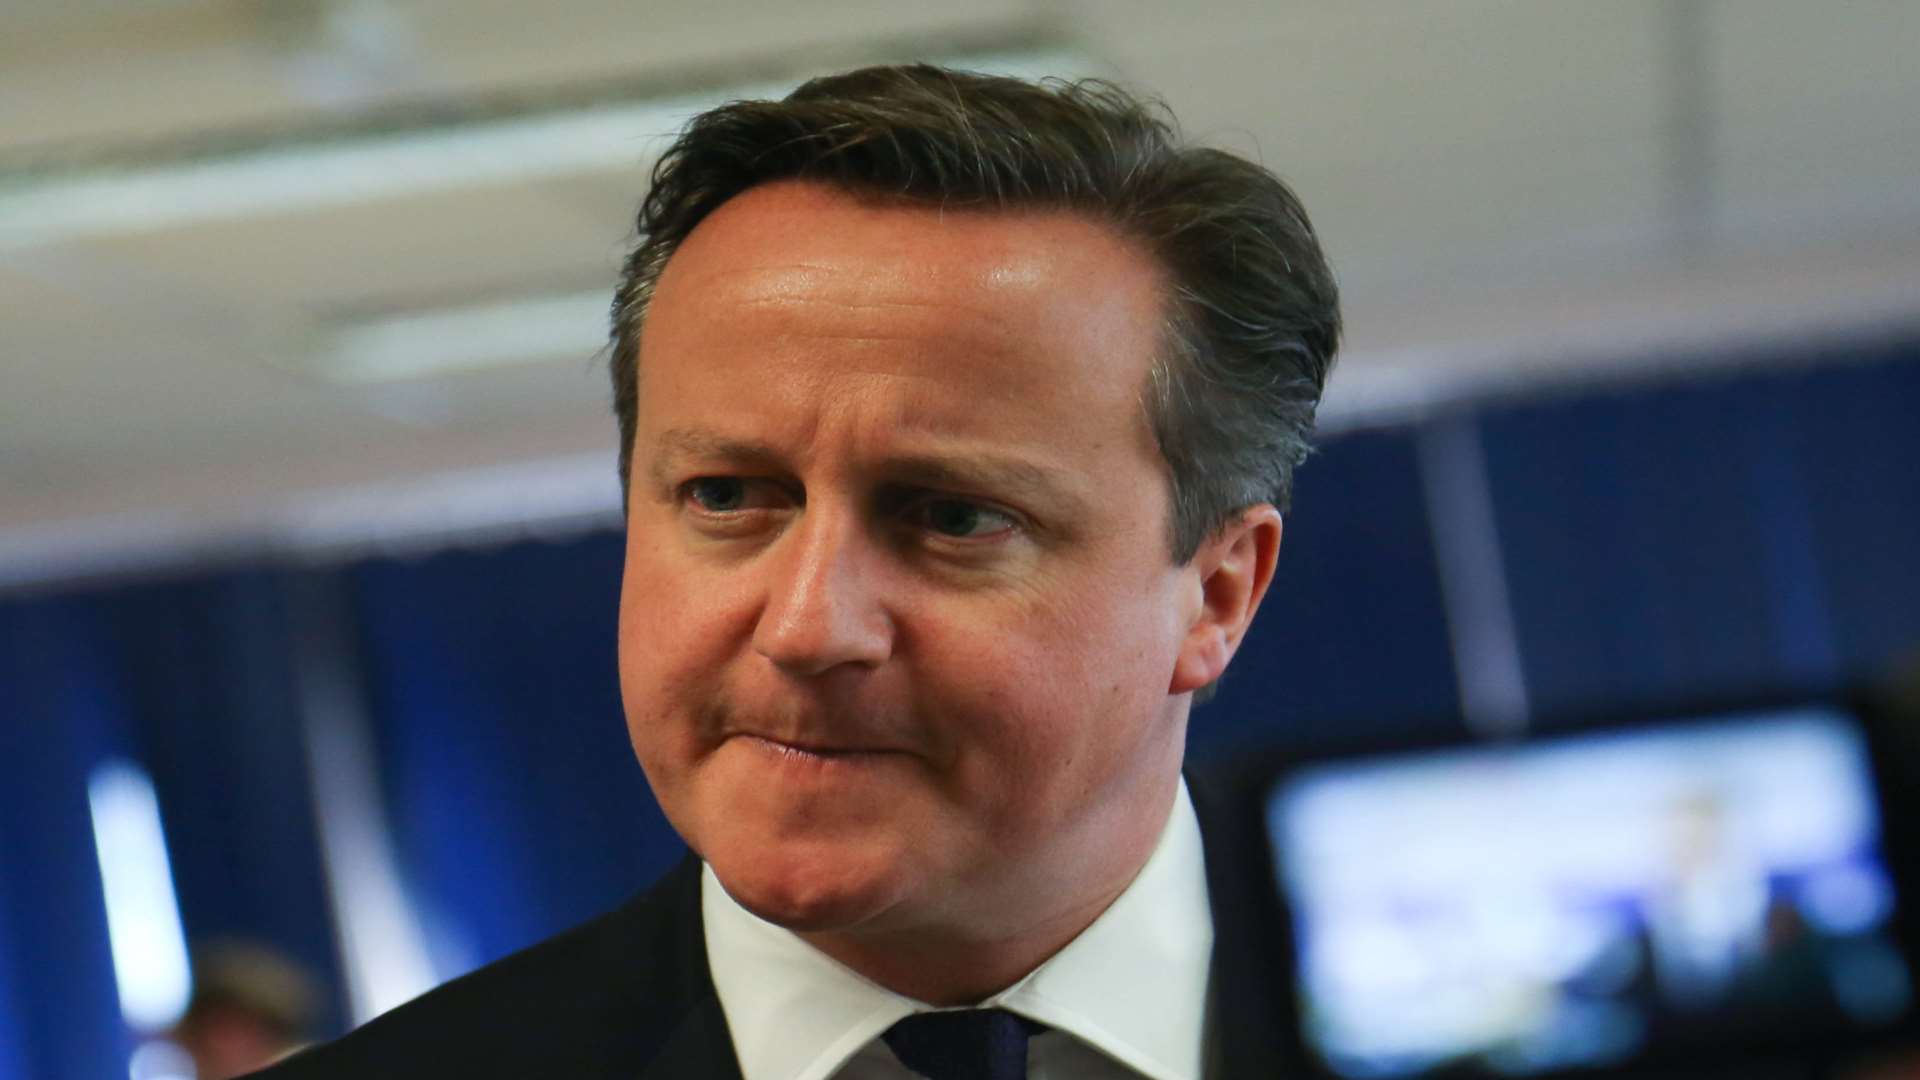 Prime Minister David Cameron has announced his resignation